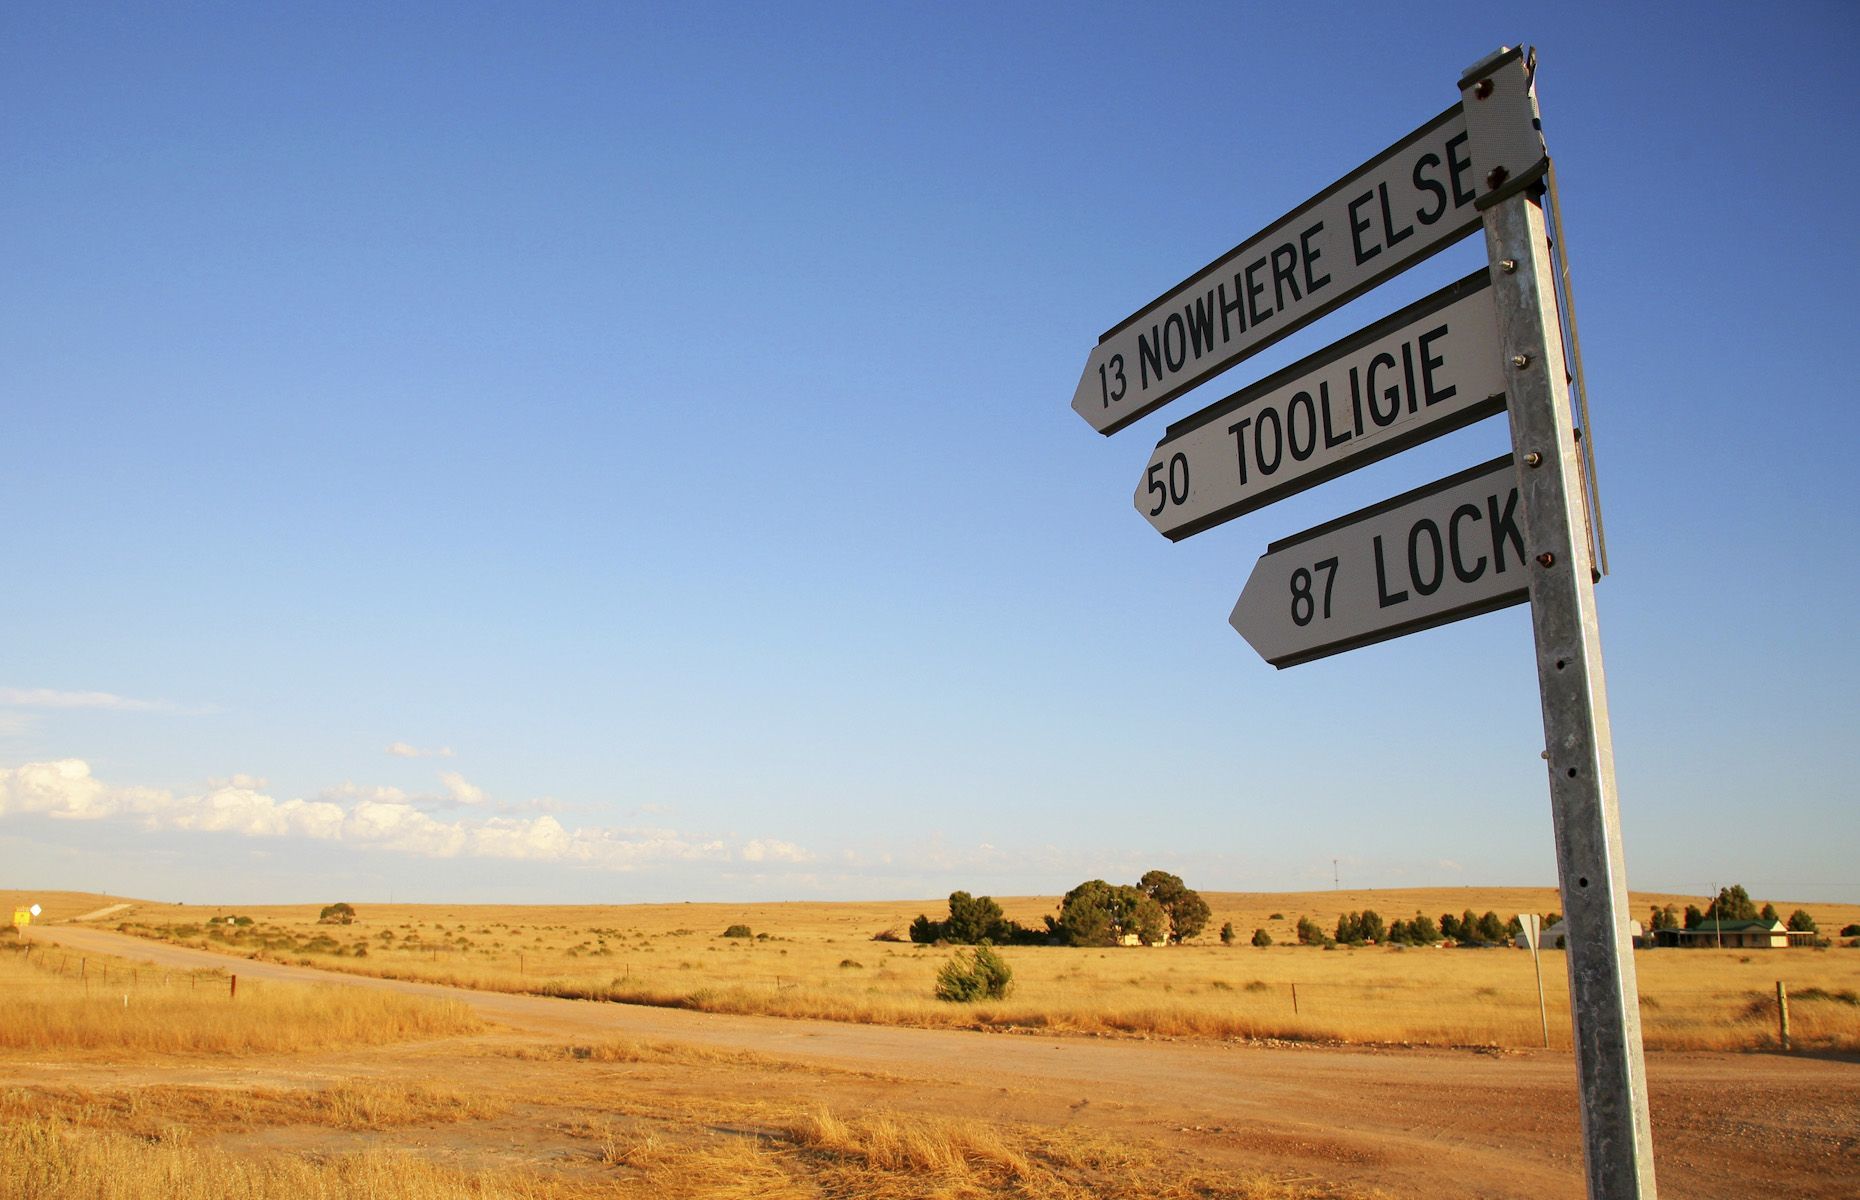 Australian name. Nowhere Australia. Nowhere else in the Australian Outback. Road numbers in Australia. Give way in Australia.